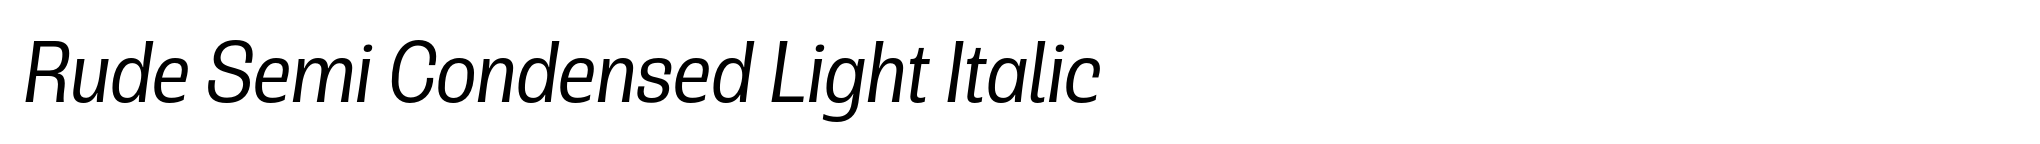 Rude Semi Condensed Light Italic image